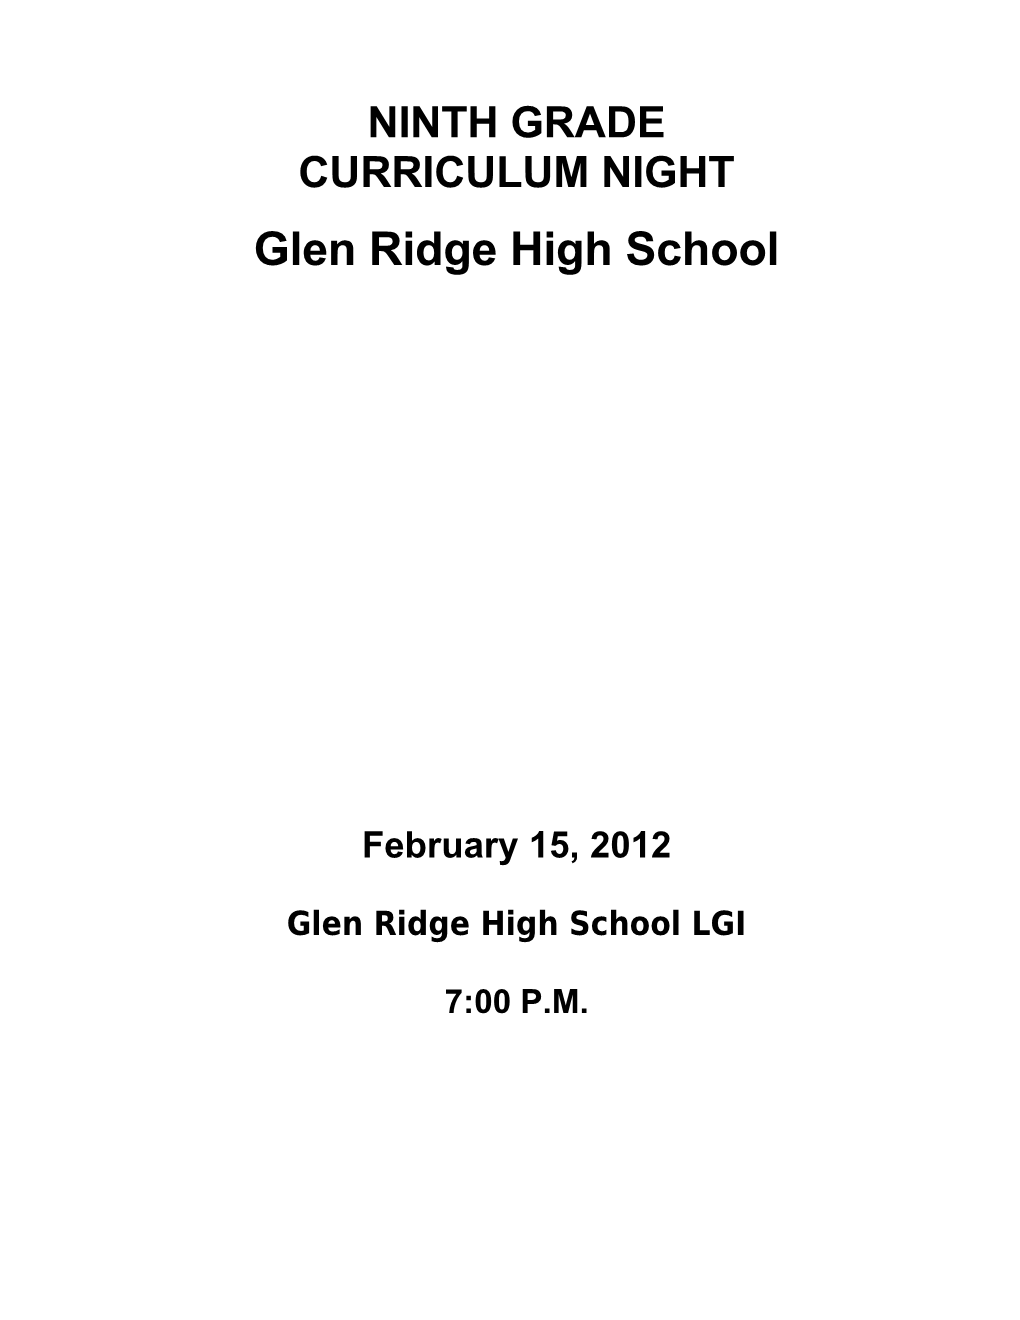 Glen Ridge High School s1